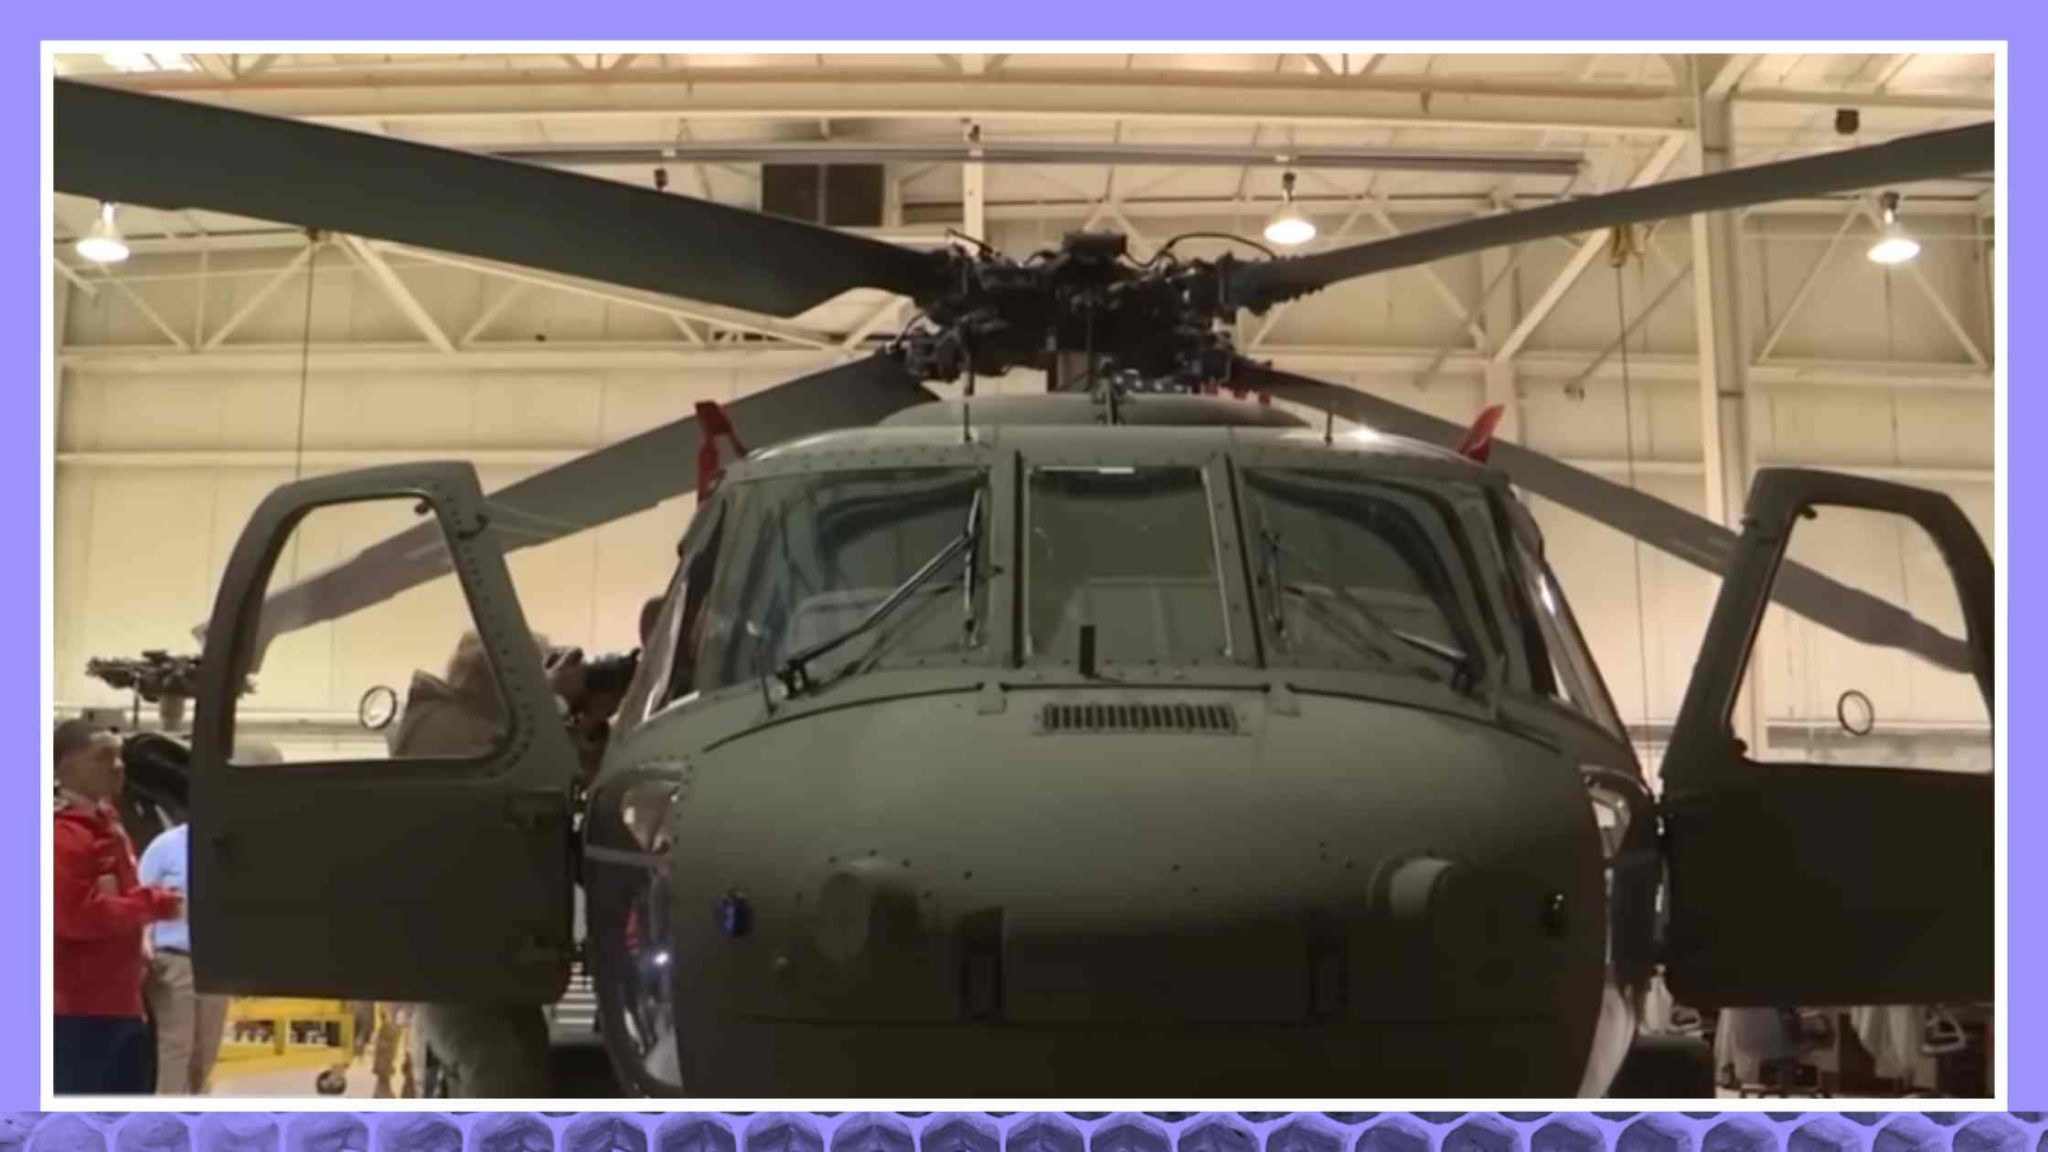 Pentagon Officials Confirm National Guard Helicopter Crash Transcript